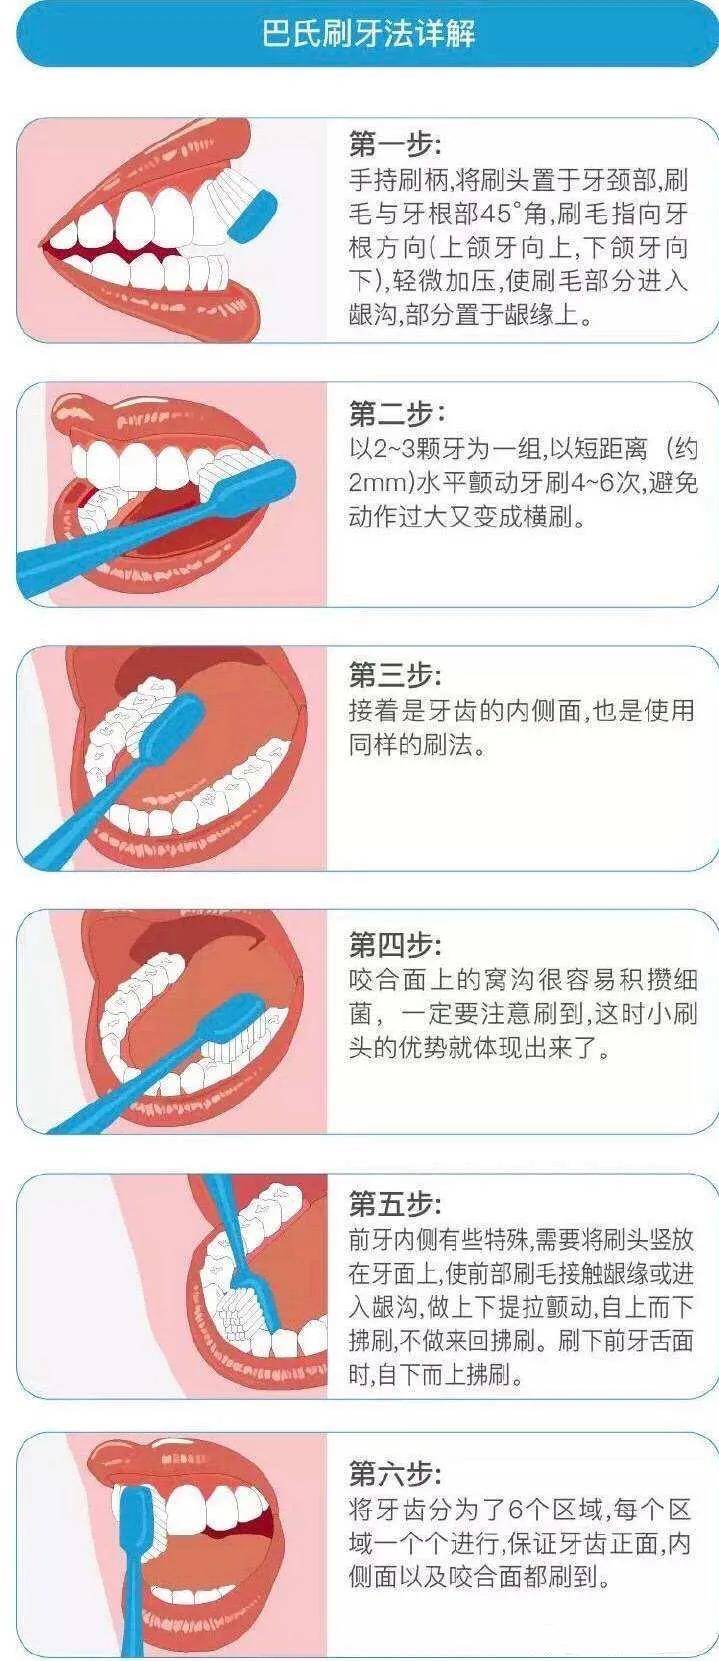 圆弧(fones)刷牙法